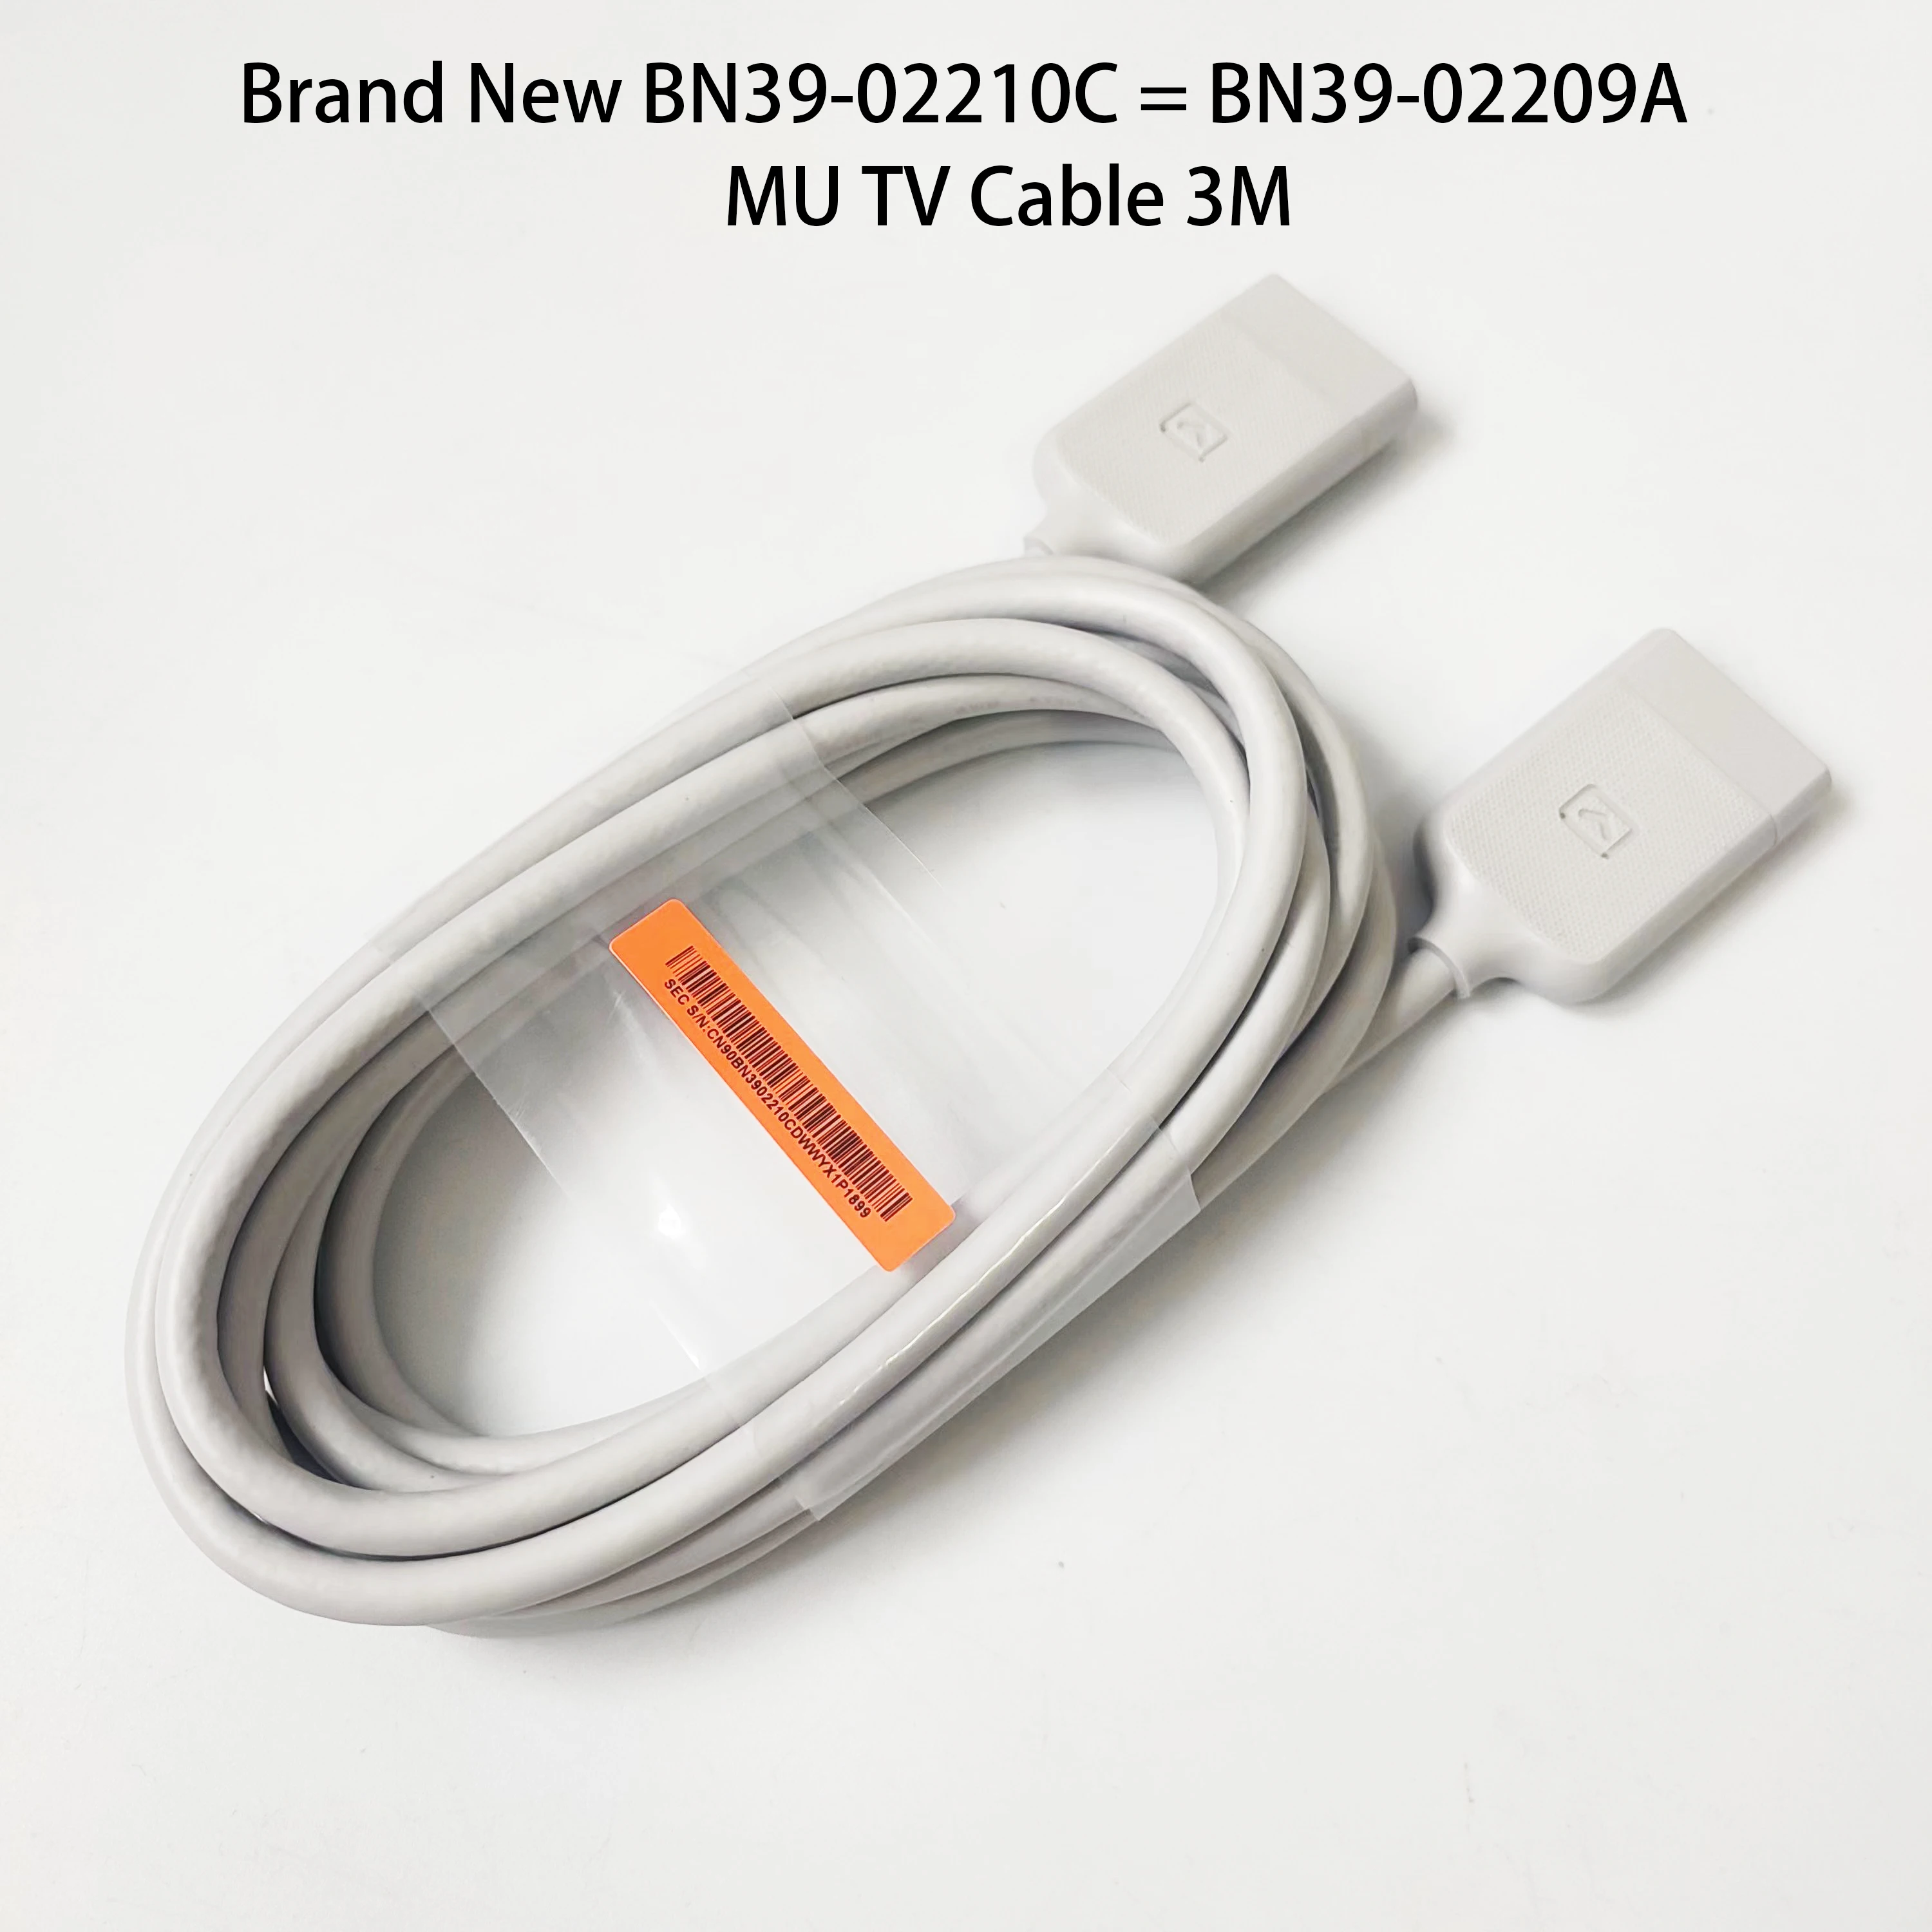 

BN39-02210C BN39-02209A BN39-02209B BN39-02210A BN39-02248B 9.84Ft 3M Cable for MU7000-MU9000 KS7000-KS9000 TV Model